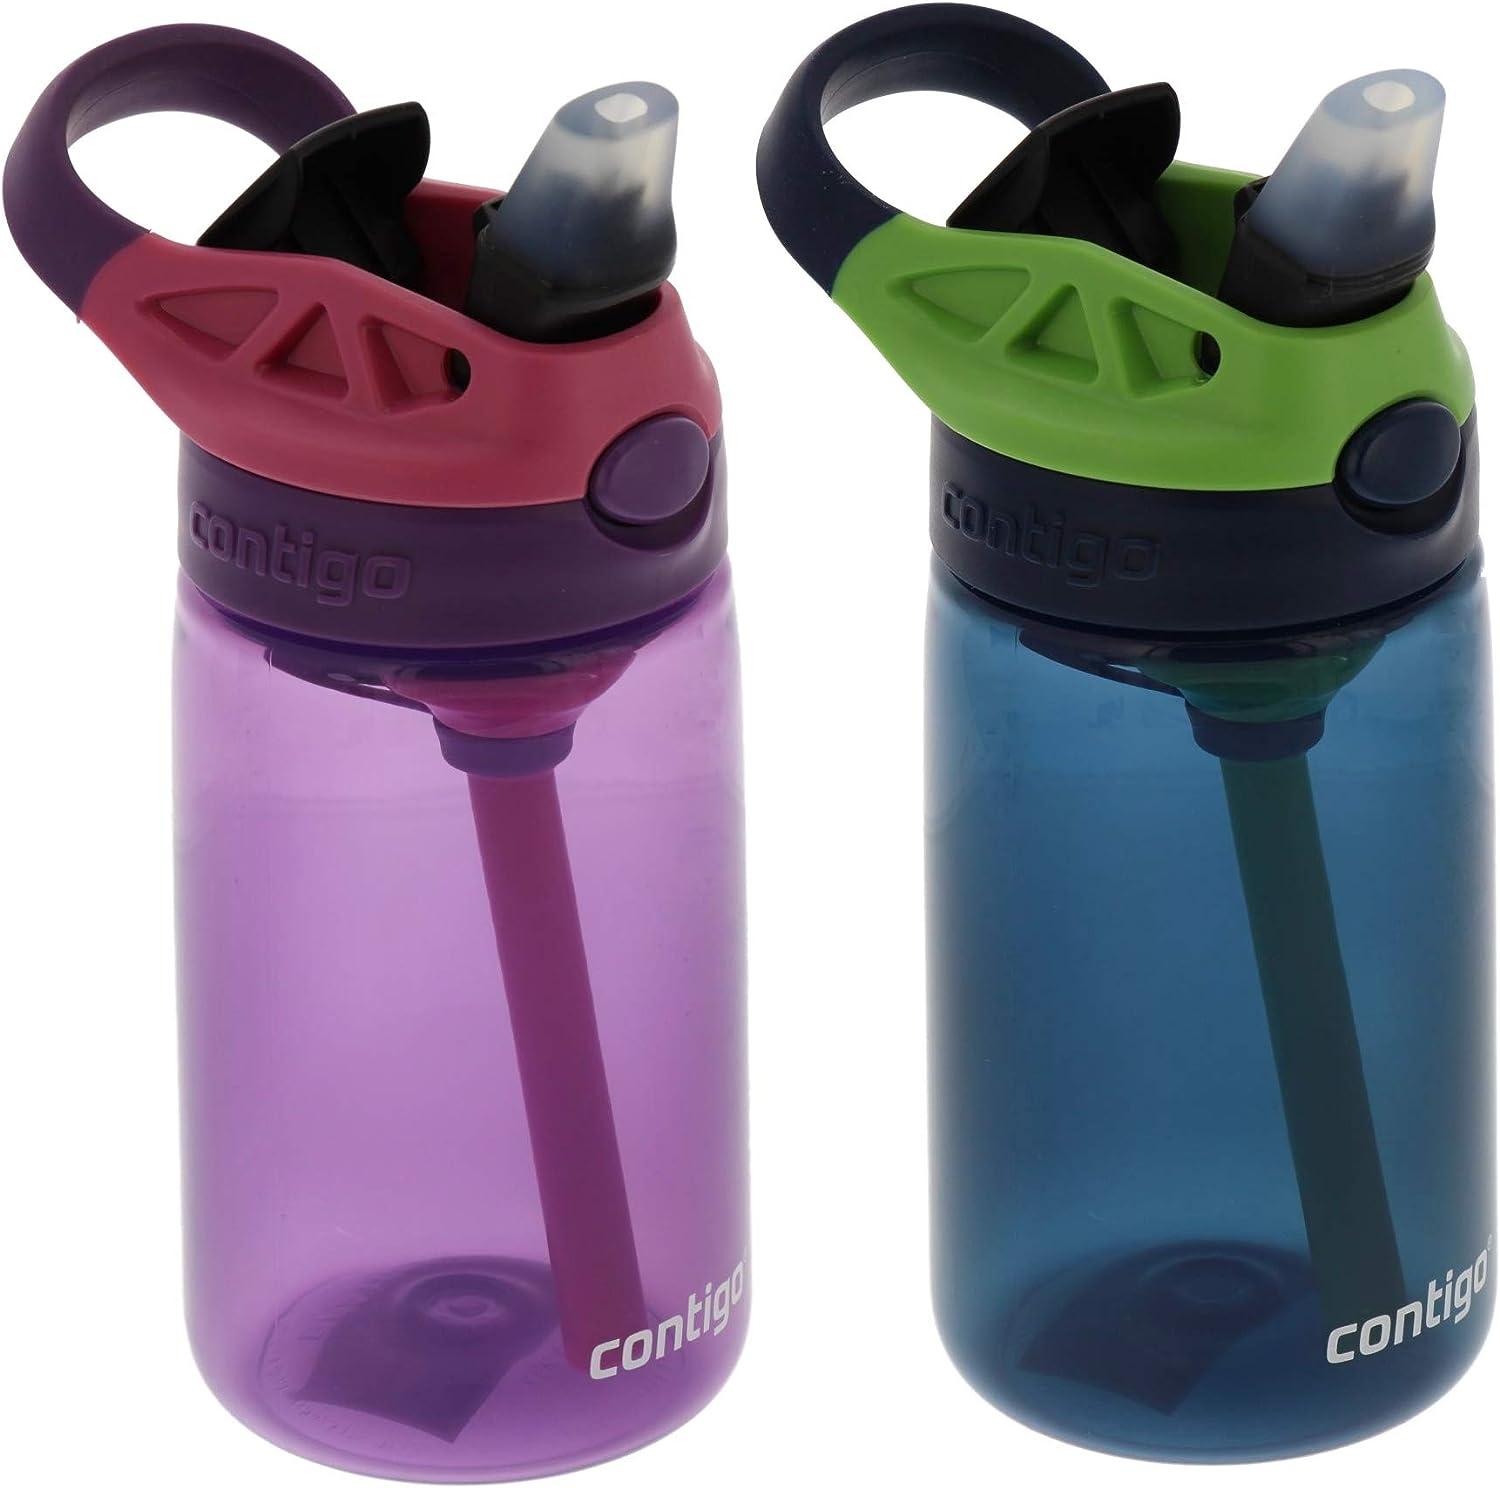 Contigo Kids Water Bottle with Autospout Straw Green & Blue, 14 fl oz.